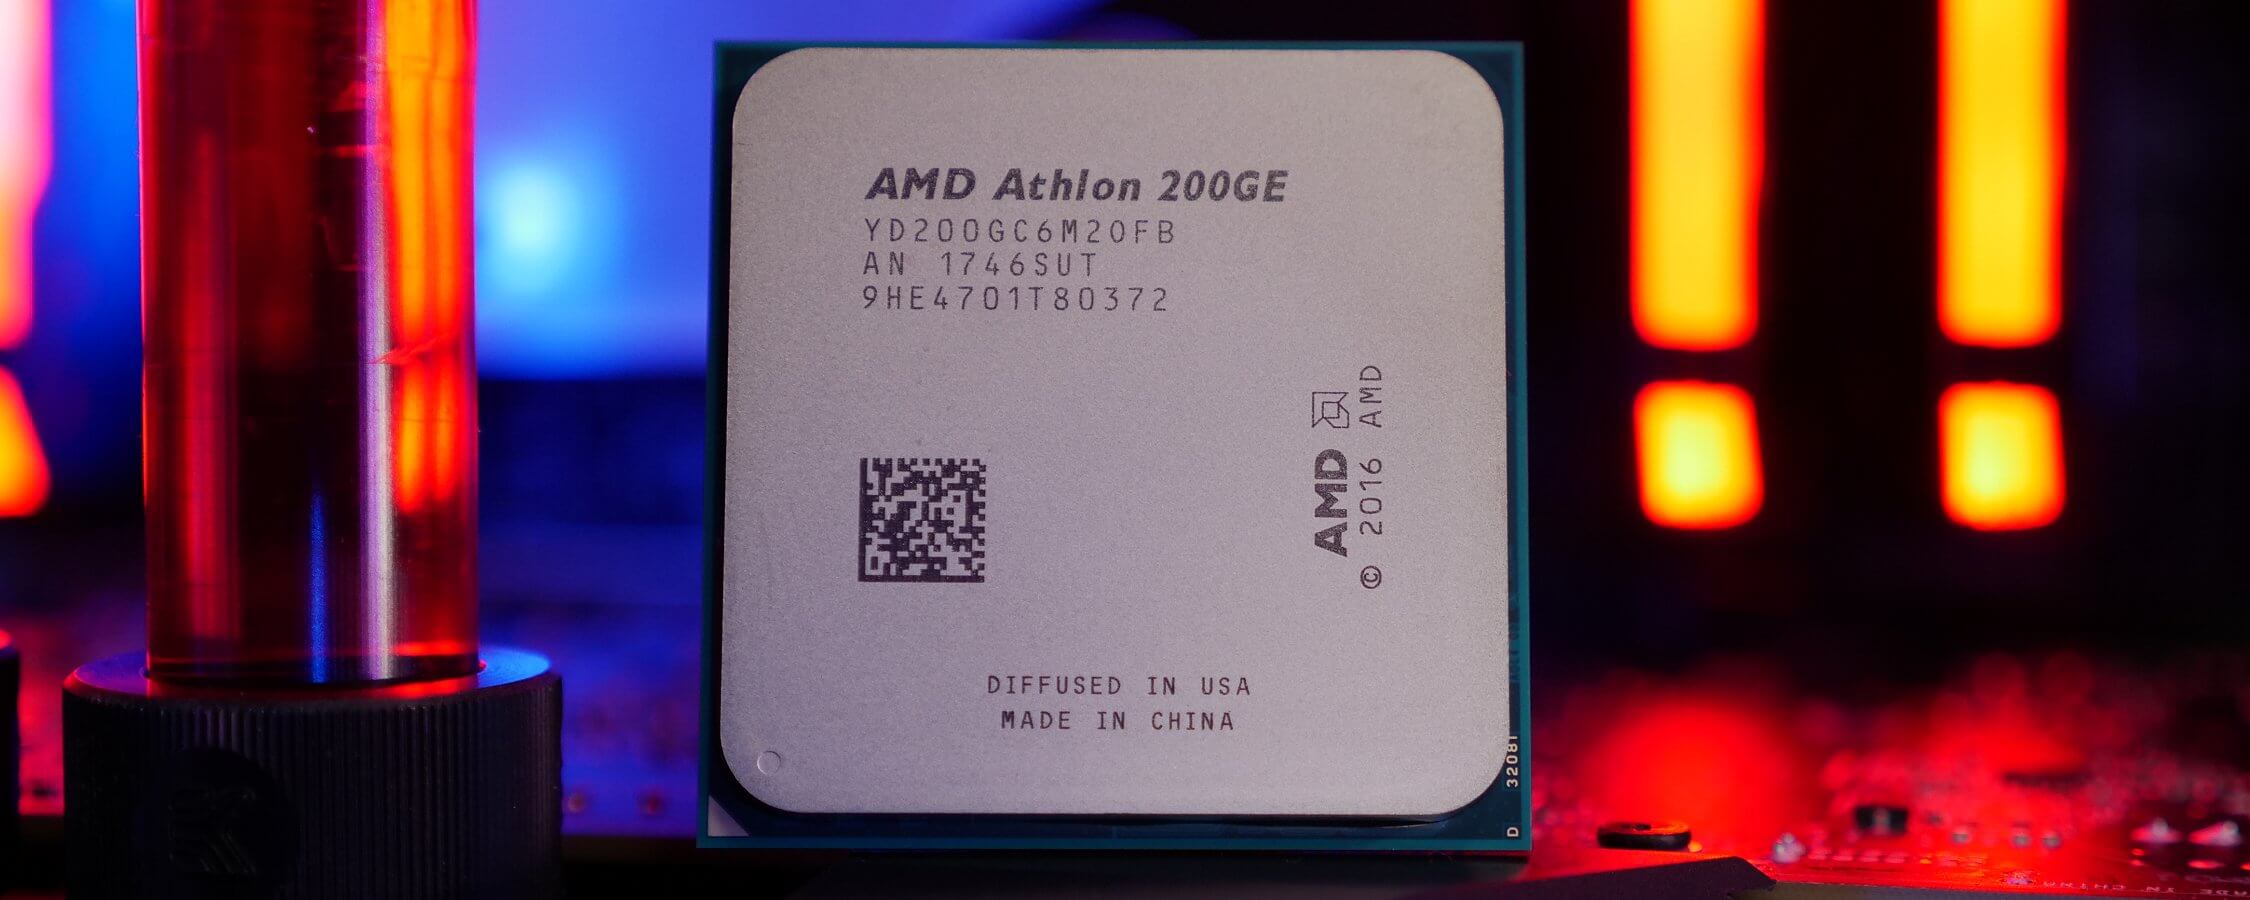 AMD Athlon 200GE Review: $55 Zen CPU